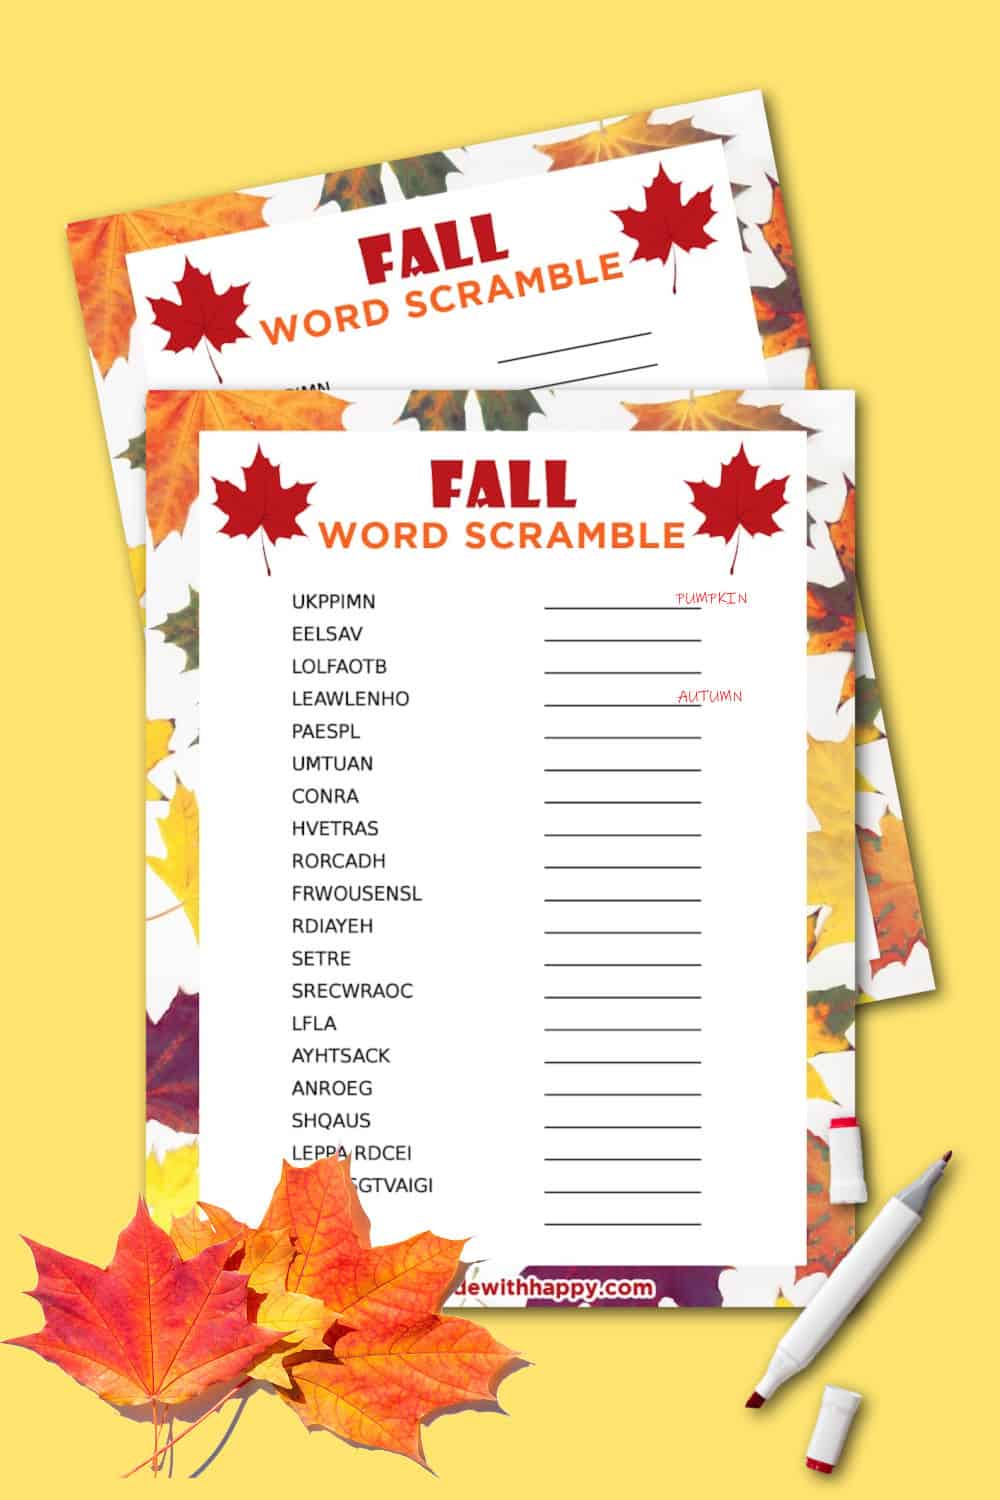 Fall Scramble Words